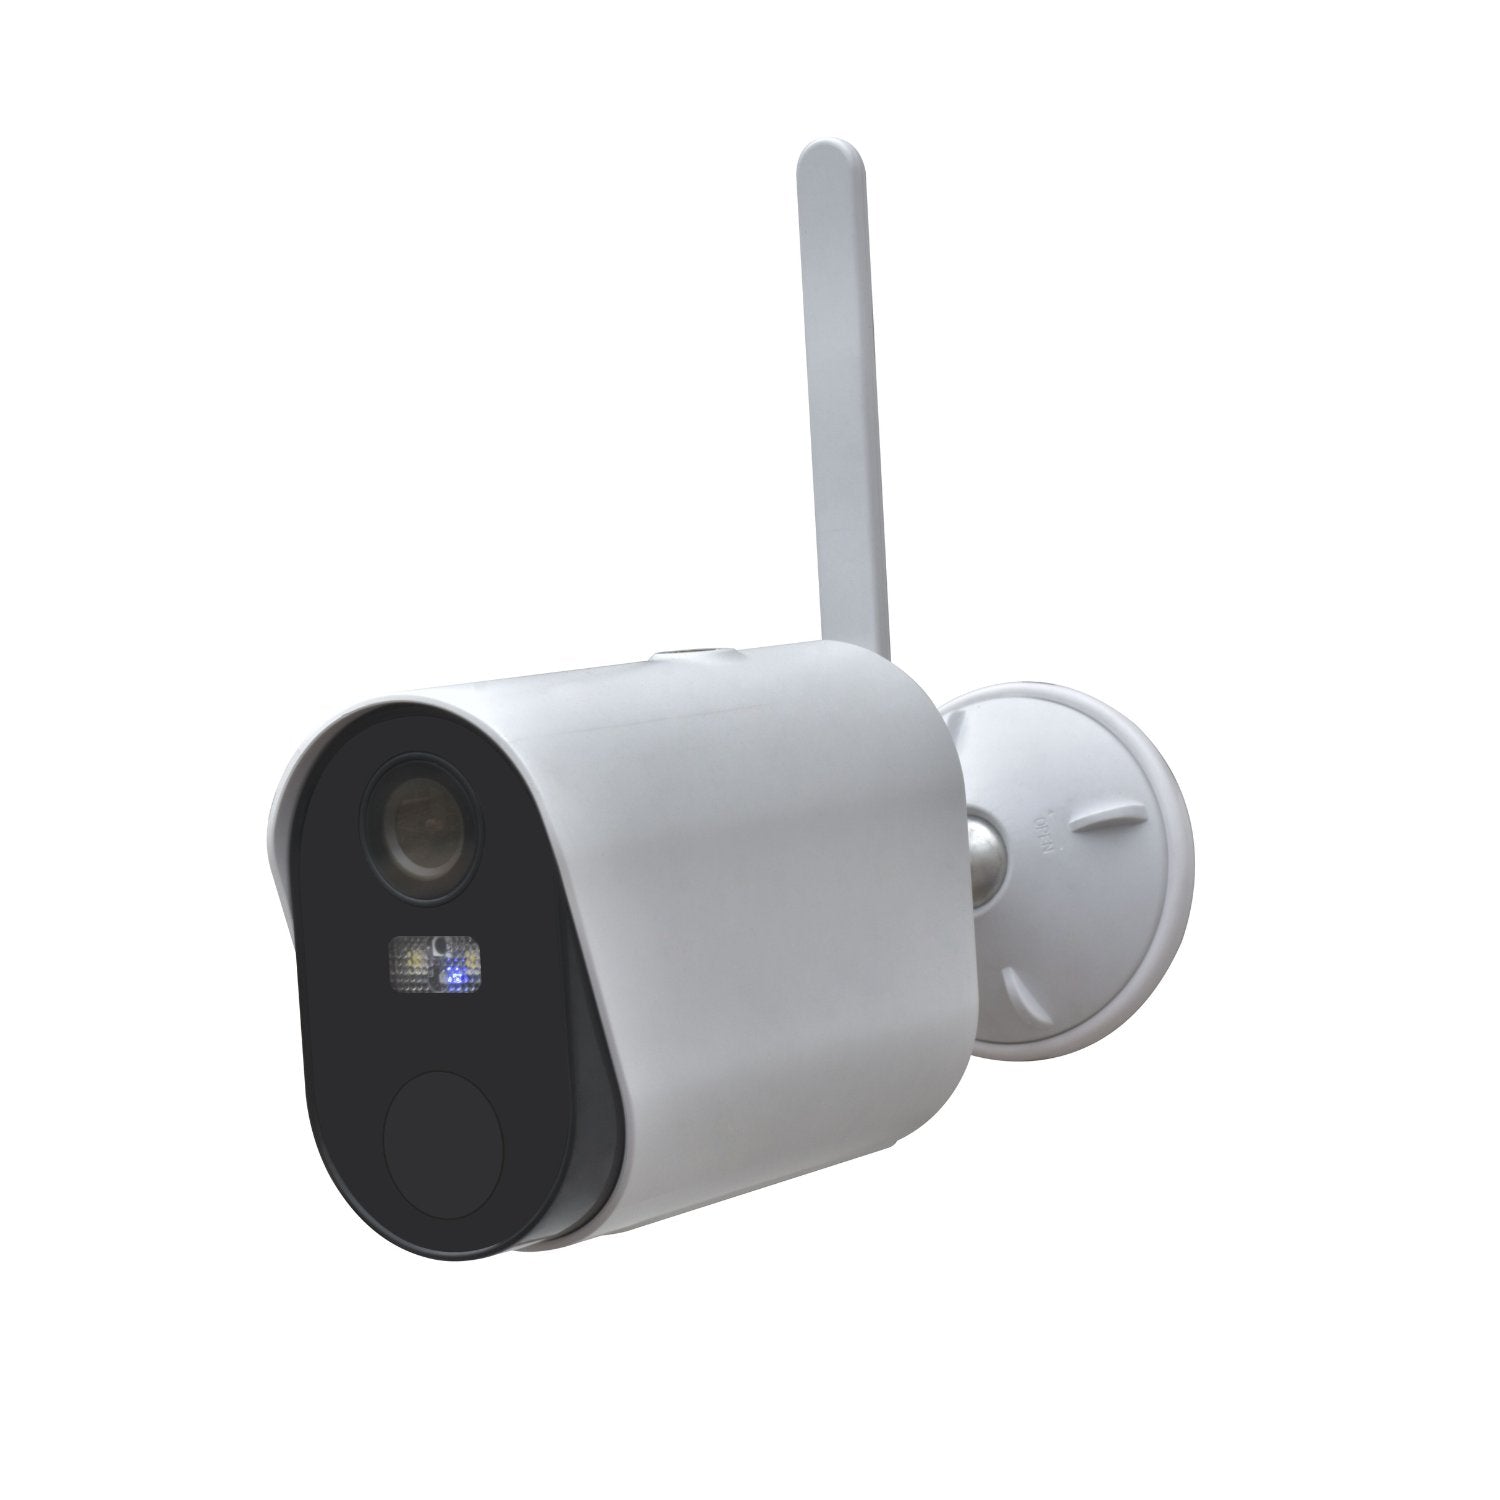 La caméra de surveillance de Xiaomi en vente en France à 39 €